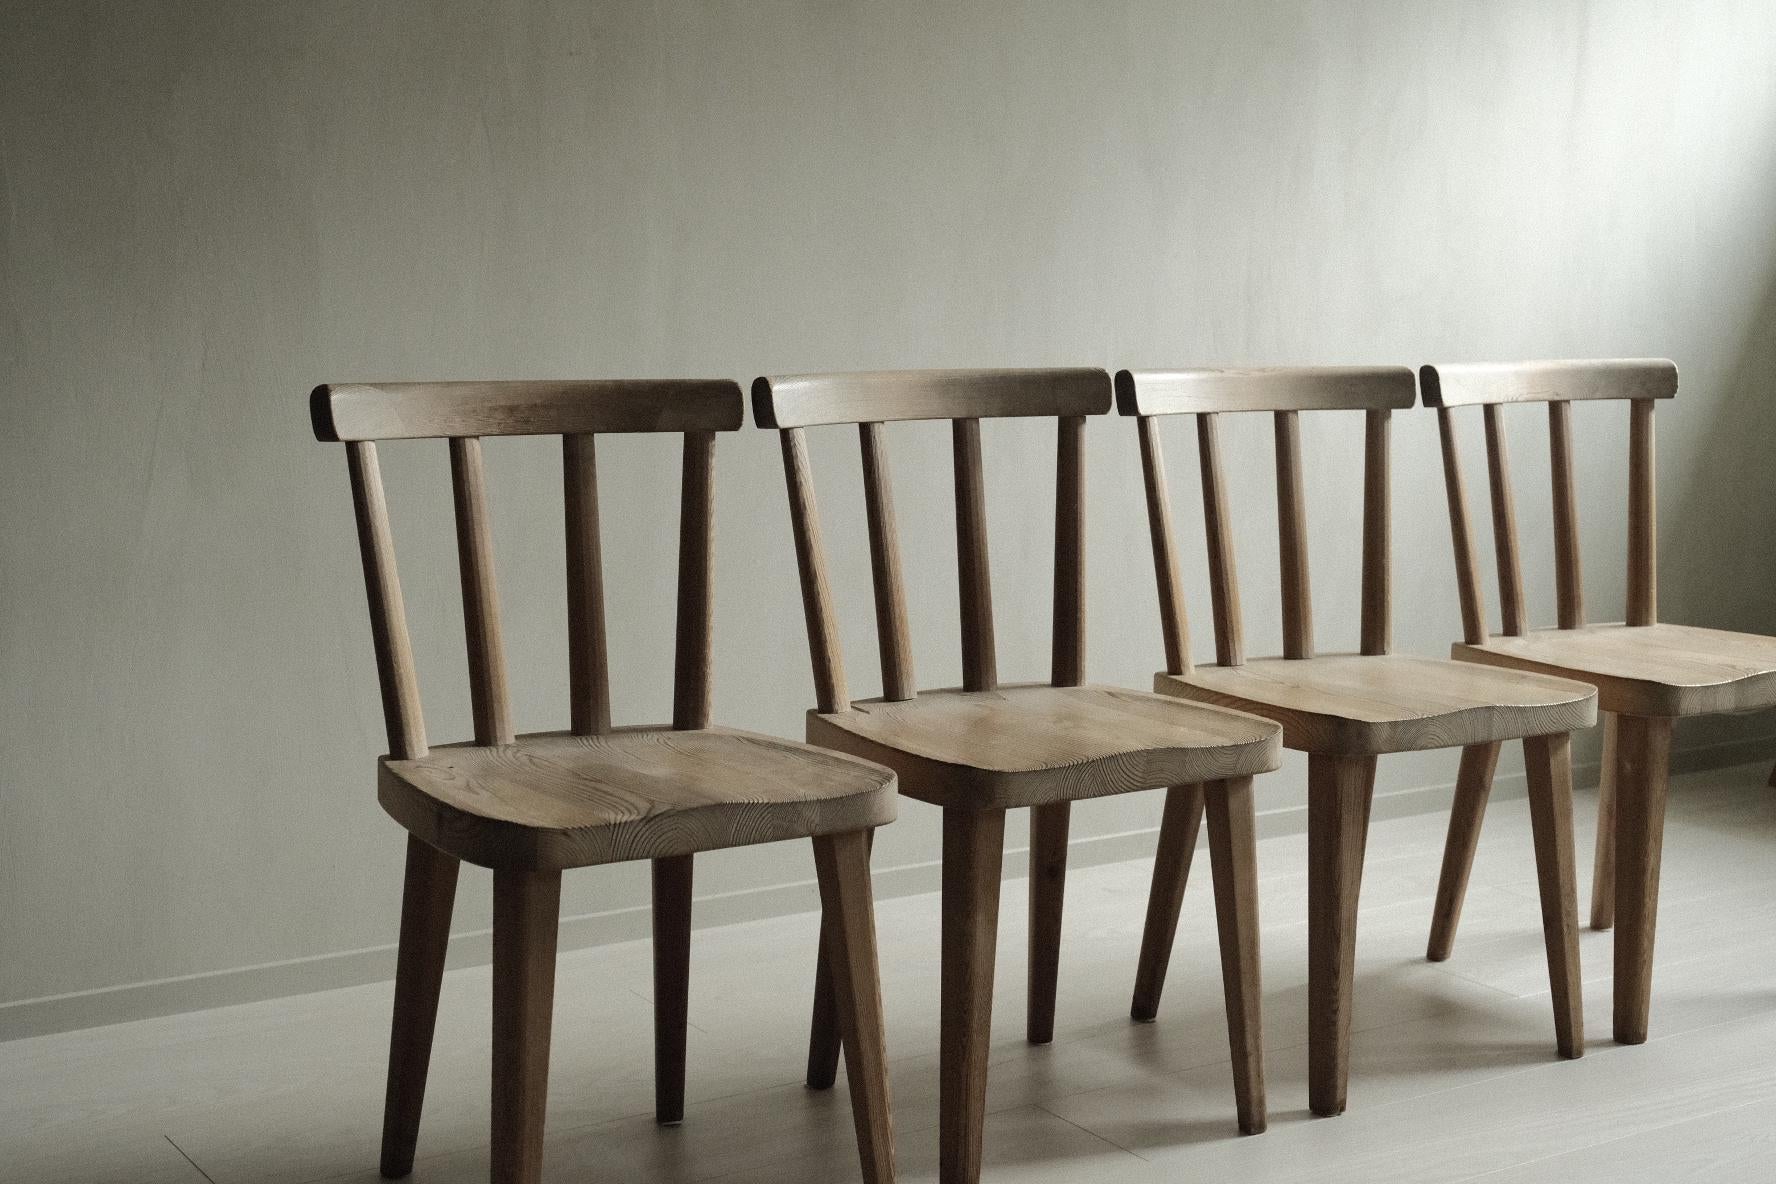 A set of four beautiful Utö chairs by Swedish designer Axel Einar Hjorth, produced by Nordiska Kompaniet in Sweden, 1930s. 


